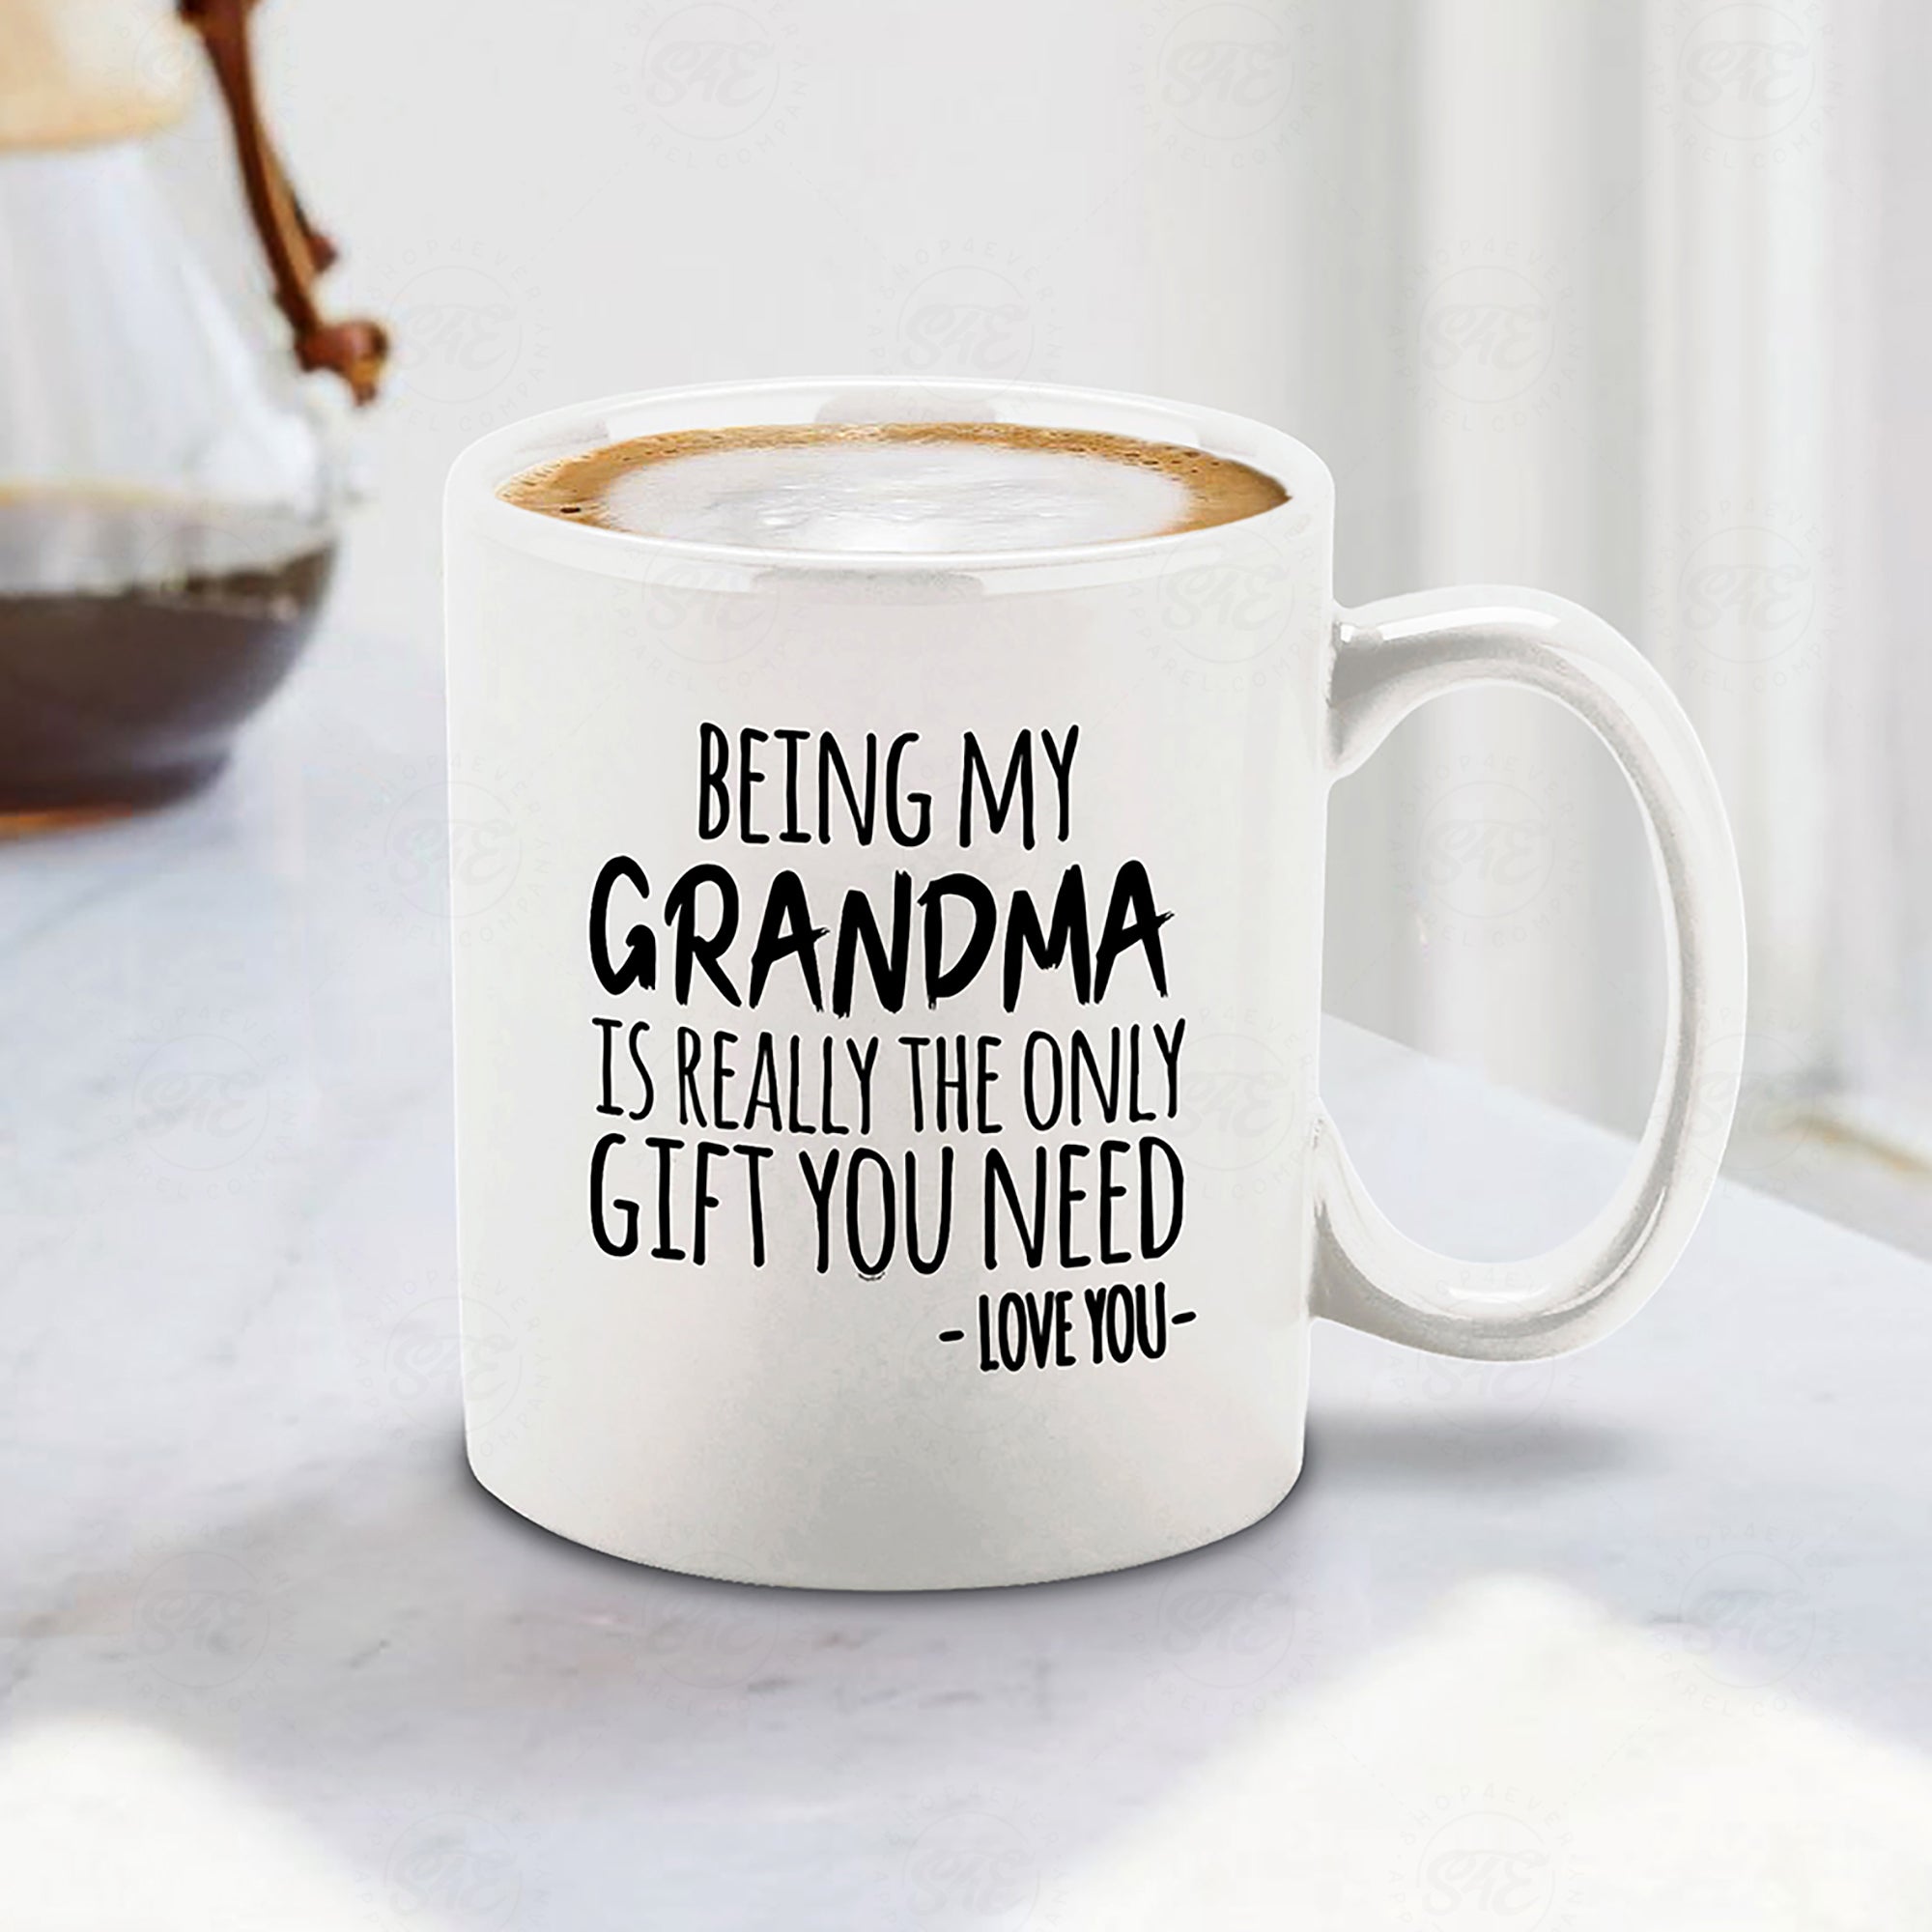 Funny Grandma Coffee Mug from Grandkids Being My Grandma Is Really The Only Gift You Need Ceramic Coffee Mug (Grandma)